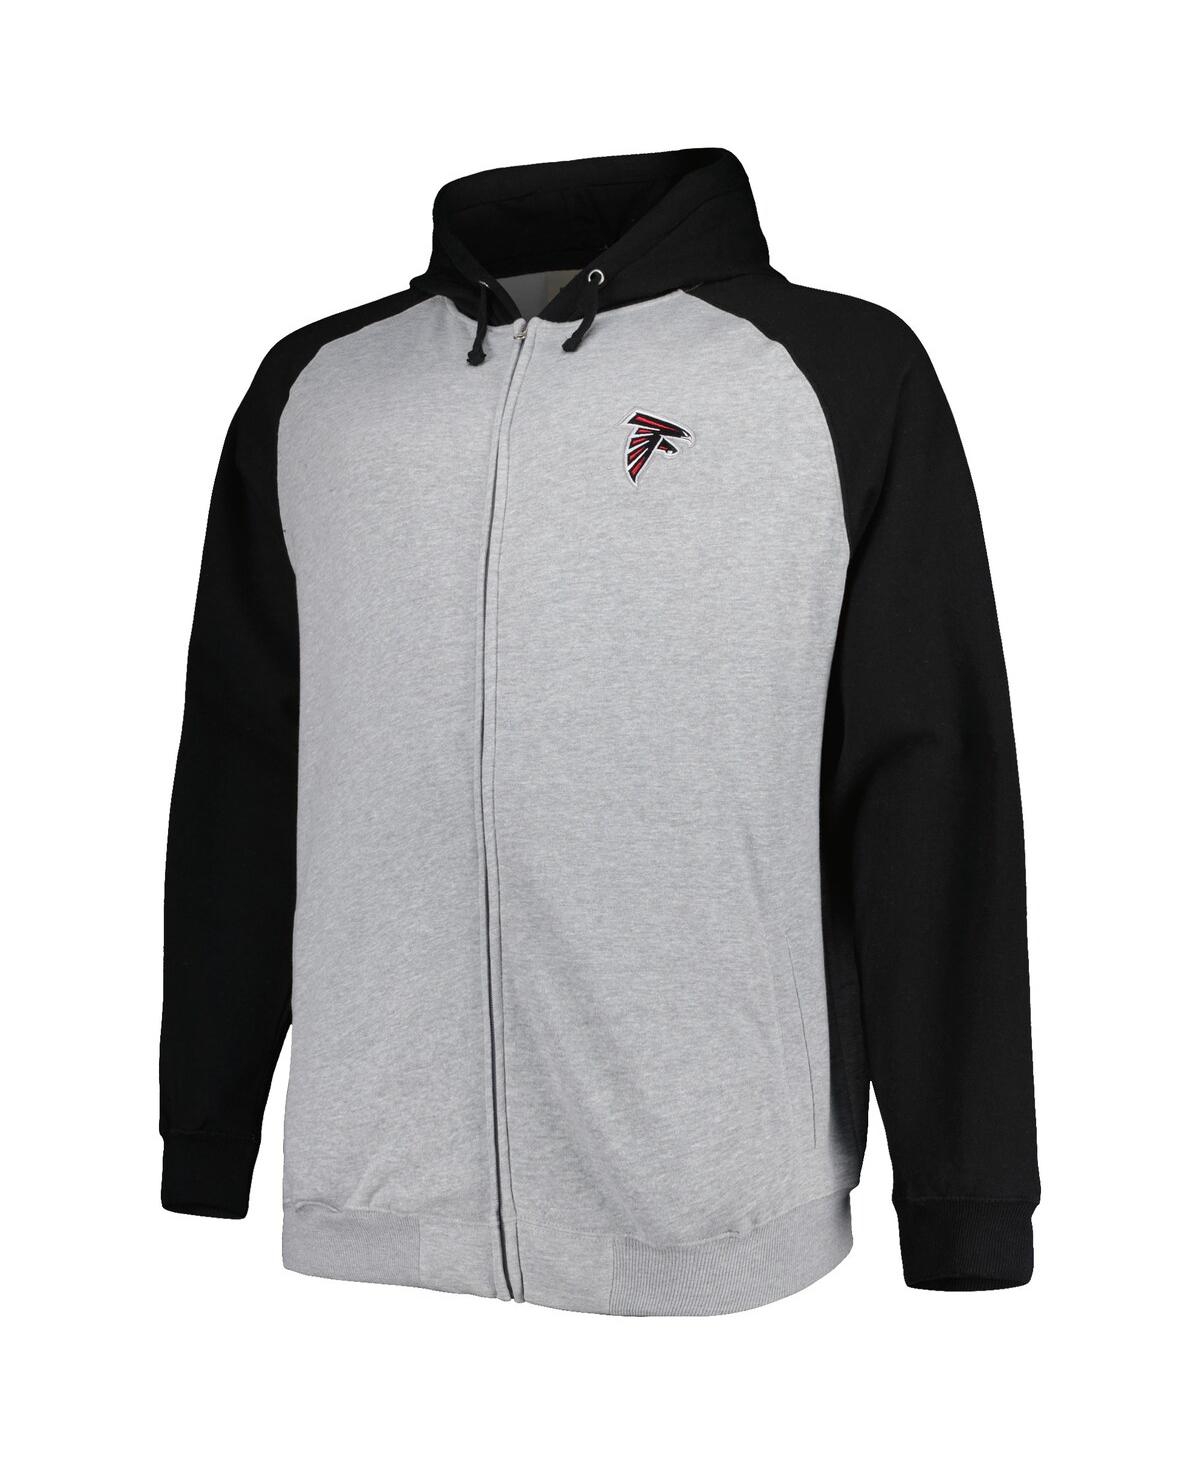 Shop Profile Men's Heather Gray Atlanta Falcons Big And Tall Fleece Raglan Full-zip Hoodie Jacket